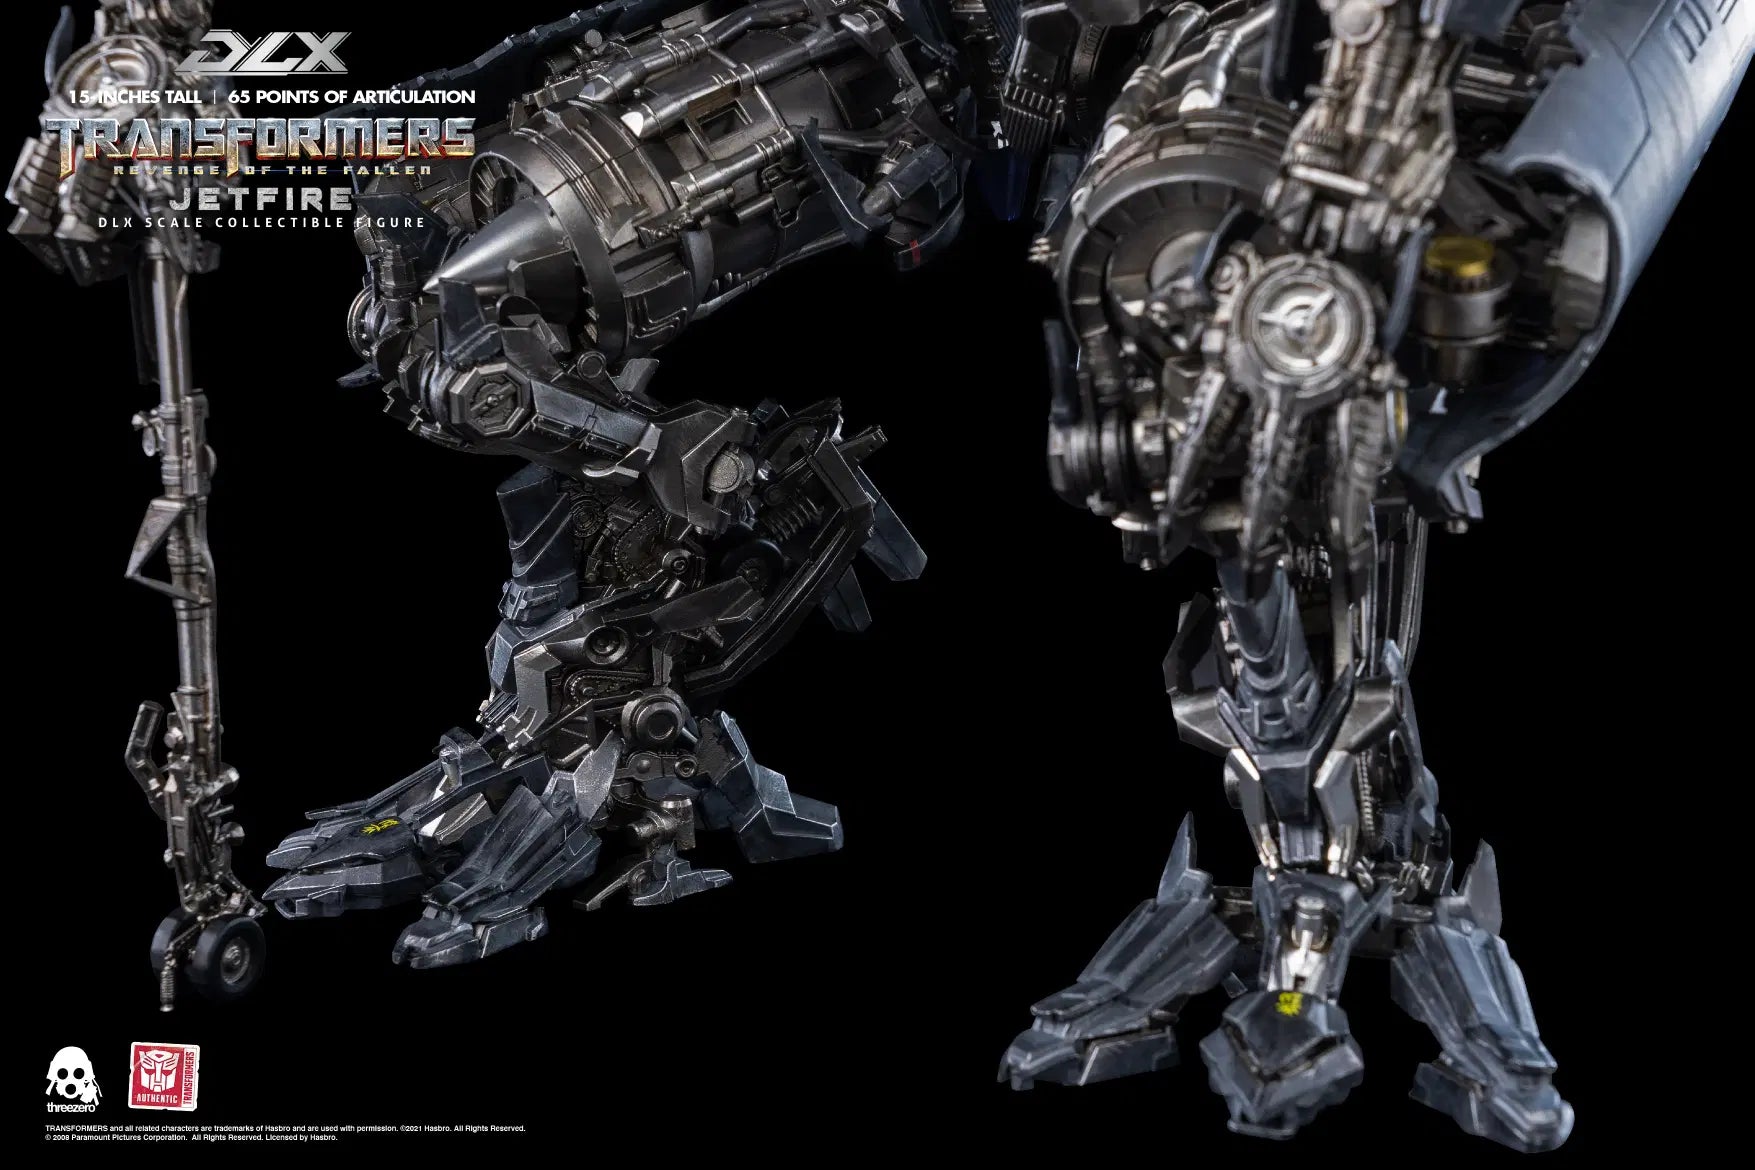 ThreeZero Transformers: Revenge of the Fallen Jetfire DLX Scale Collectible Figure(Optimus Prime Not Included)